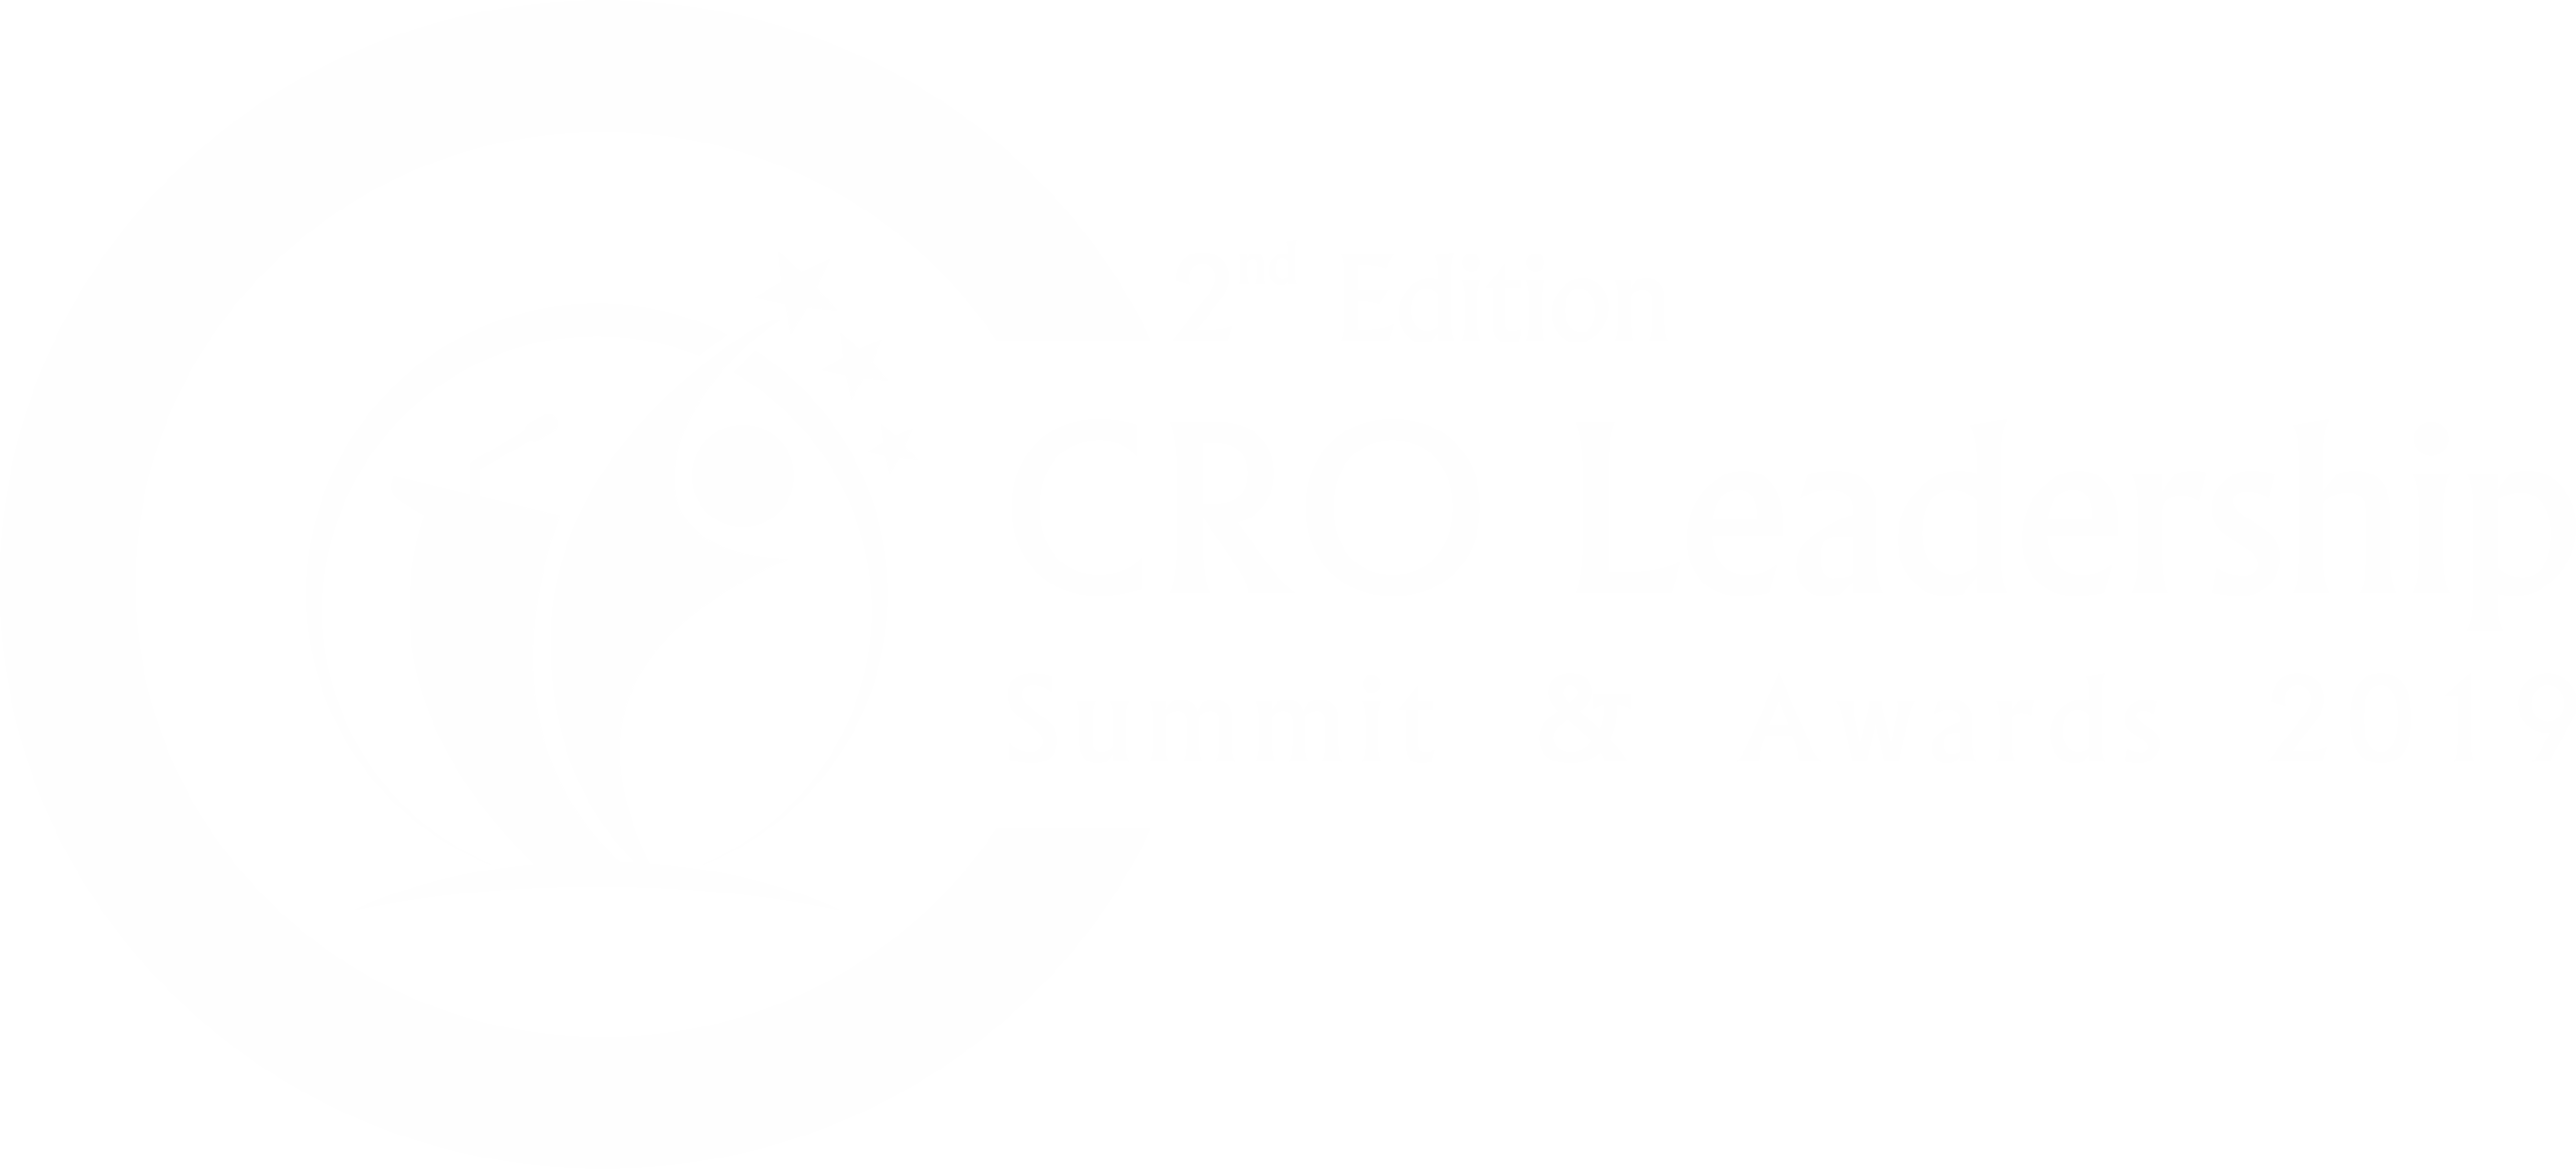 3rd Edition CRO Leadership Summit and Awards 2020